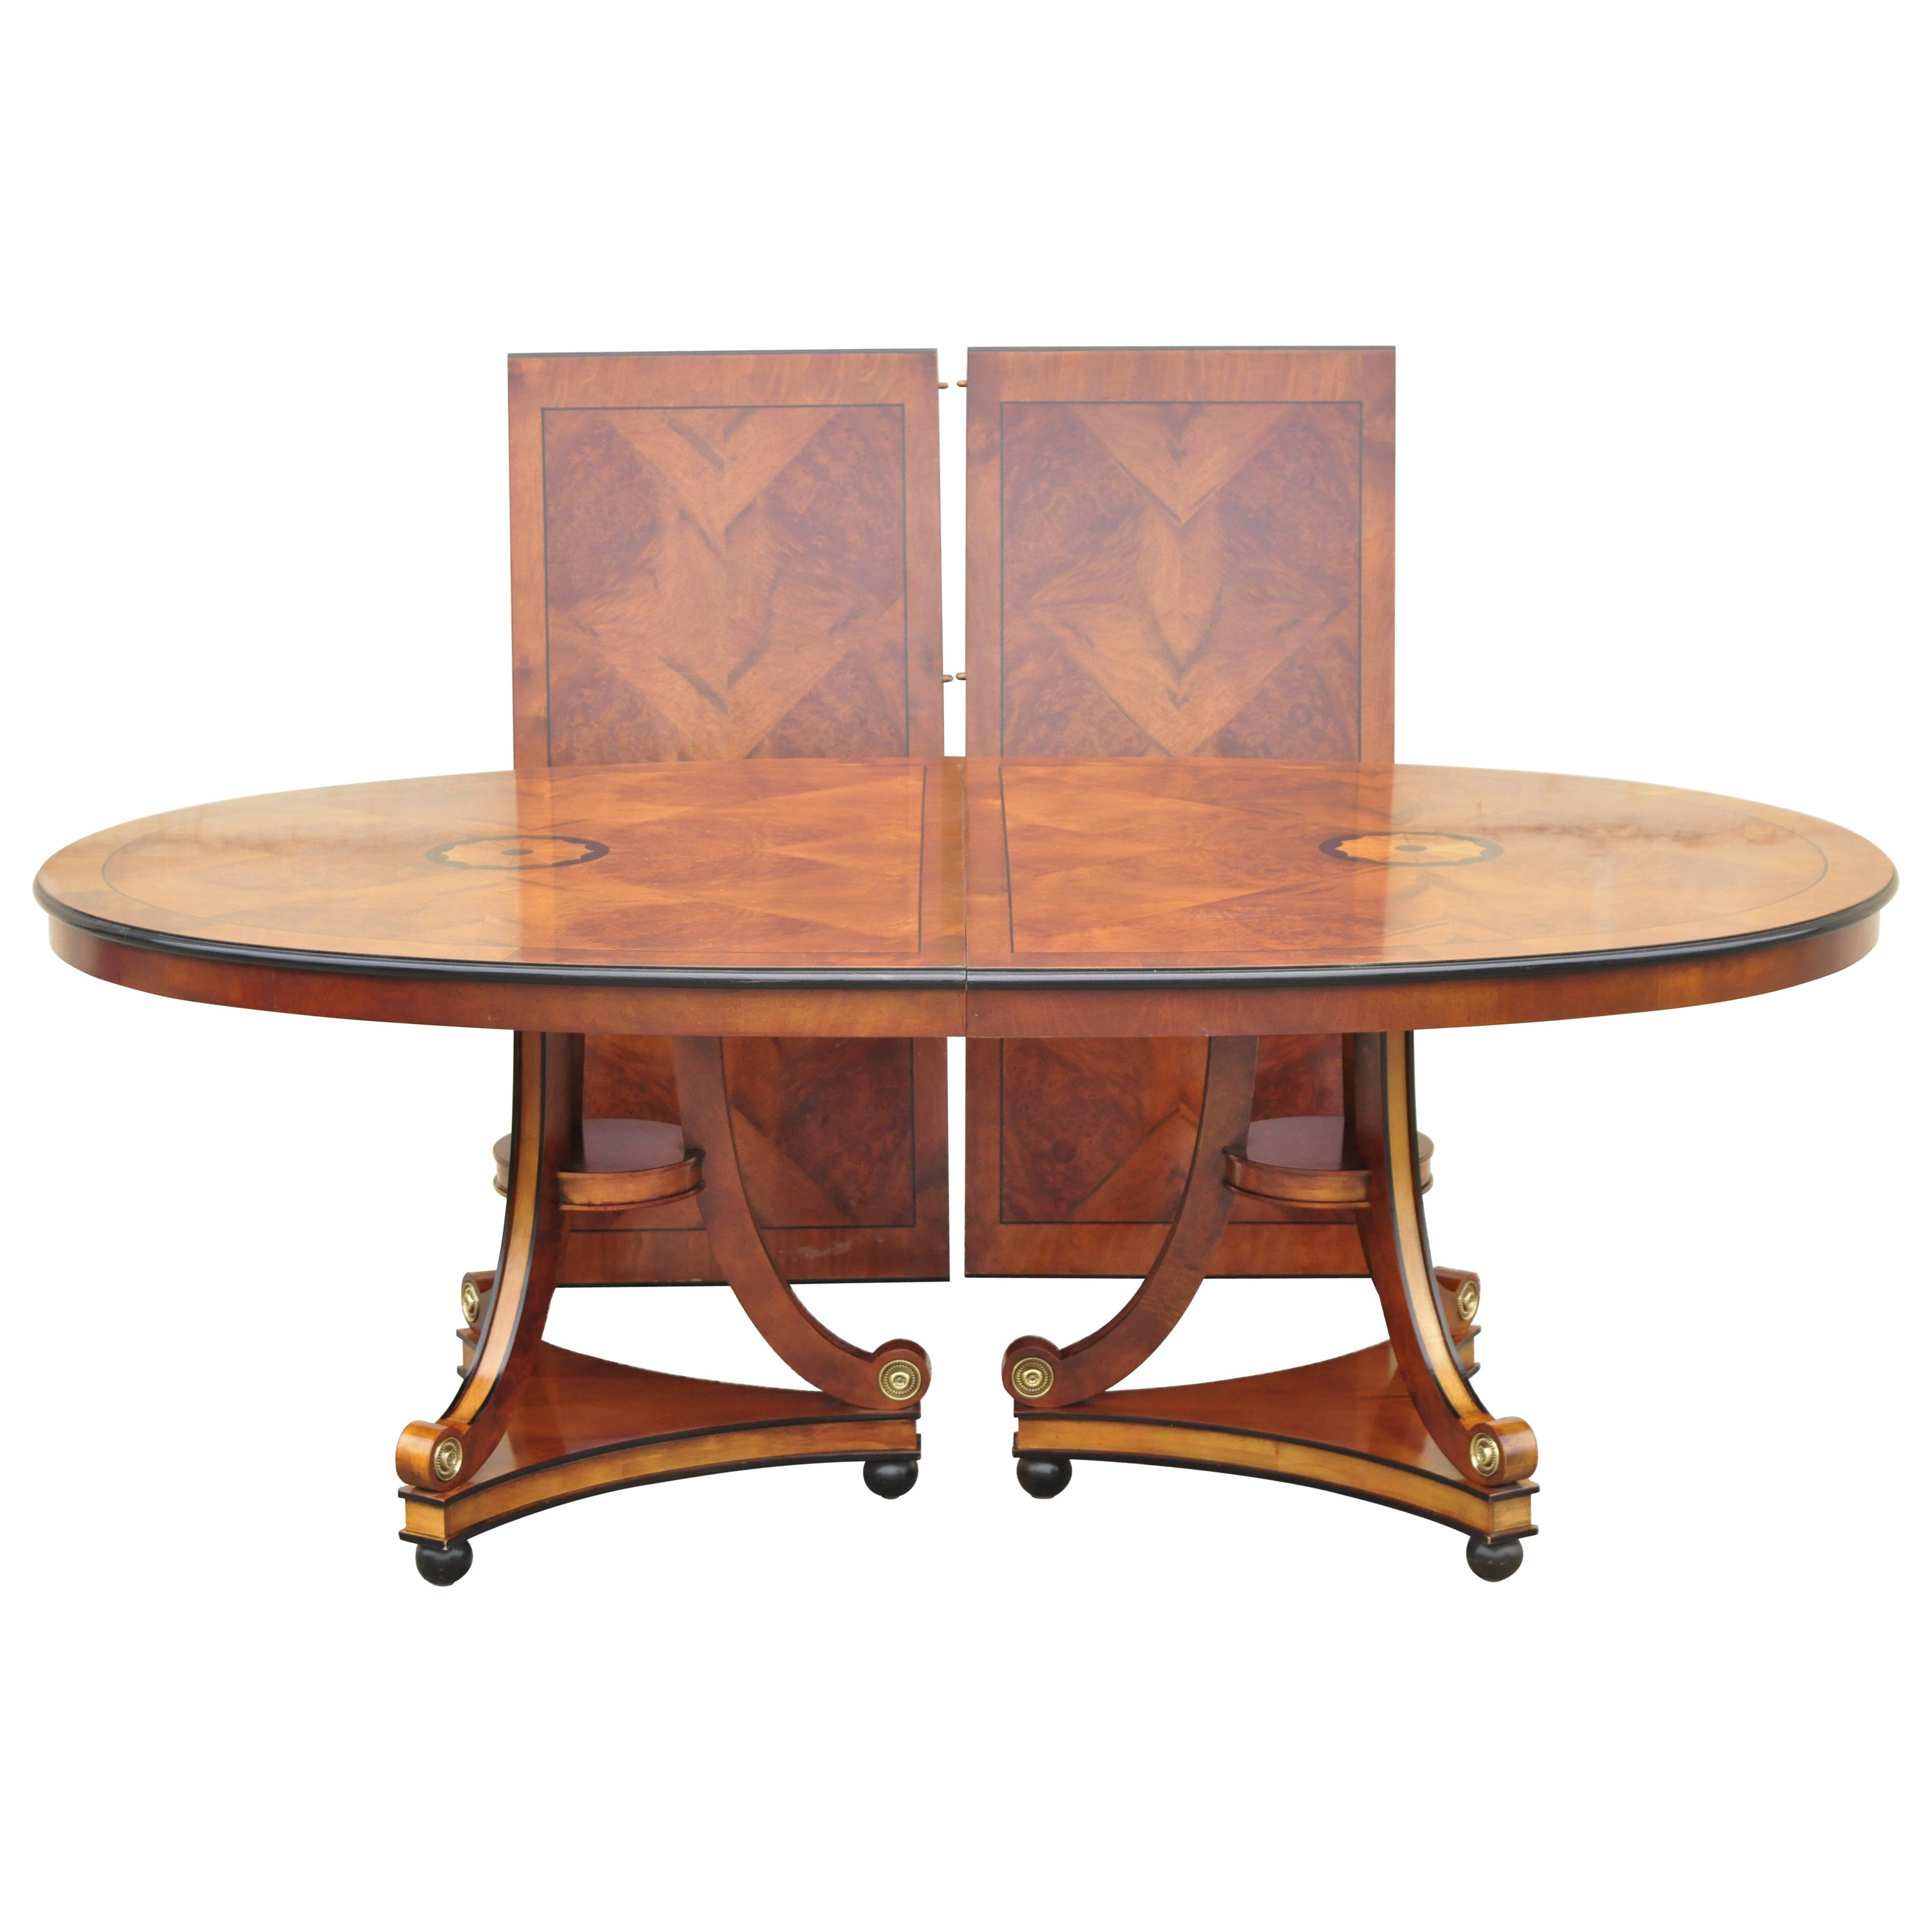 Century Furniture Co. Capuan Collection Biedermier Double Pedestal Dining Table